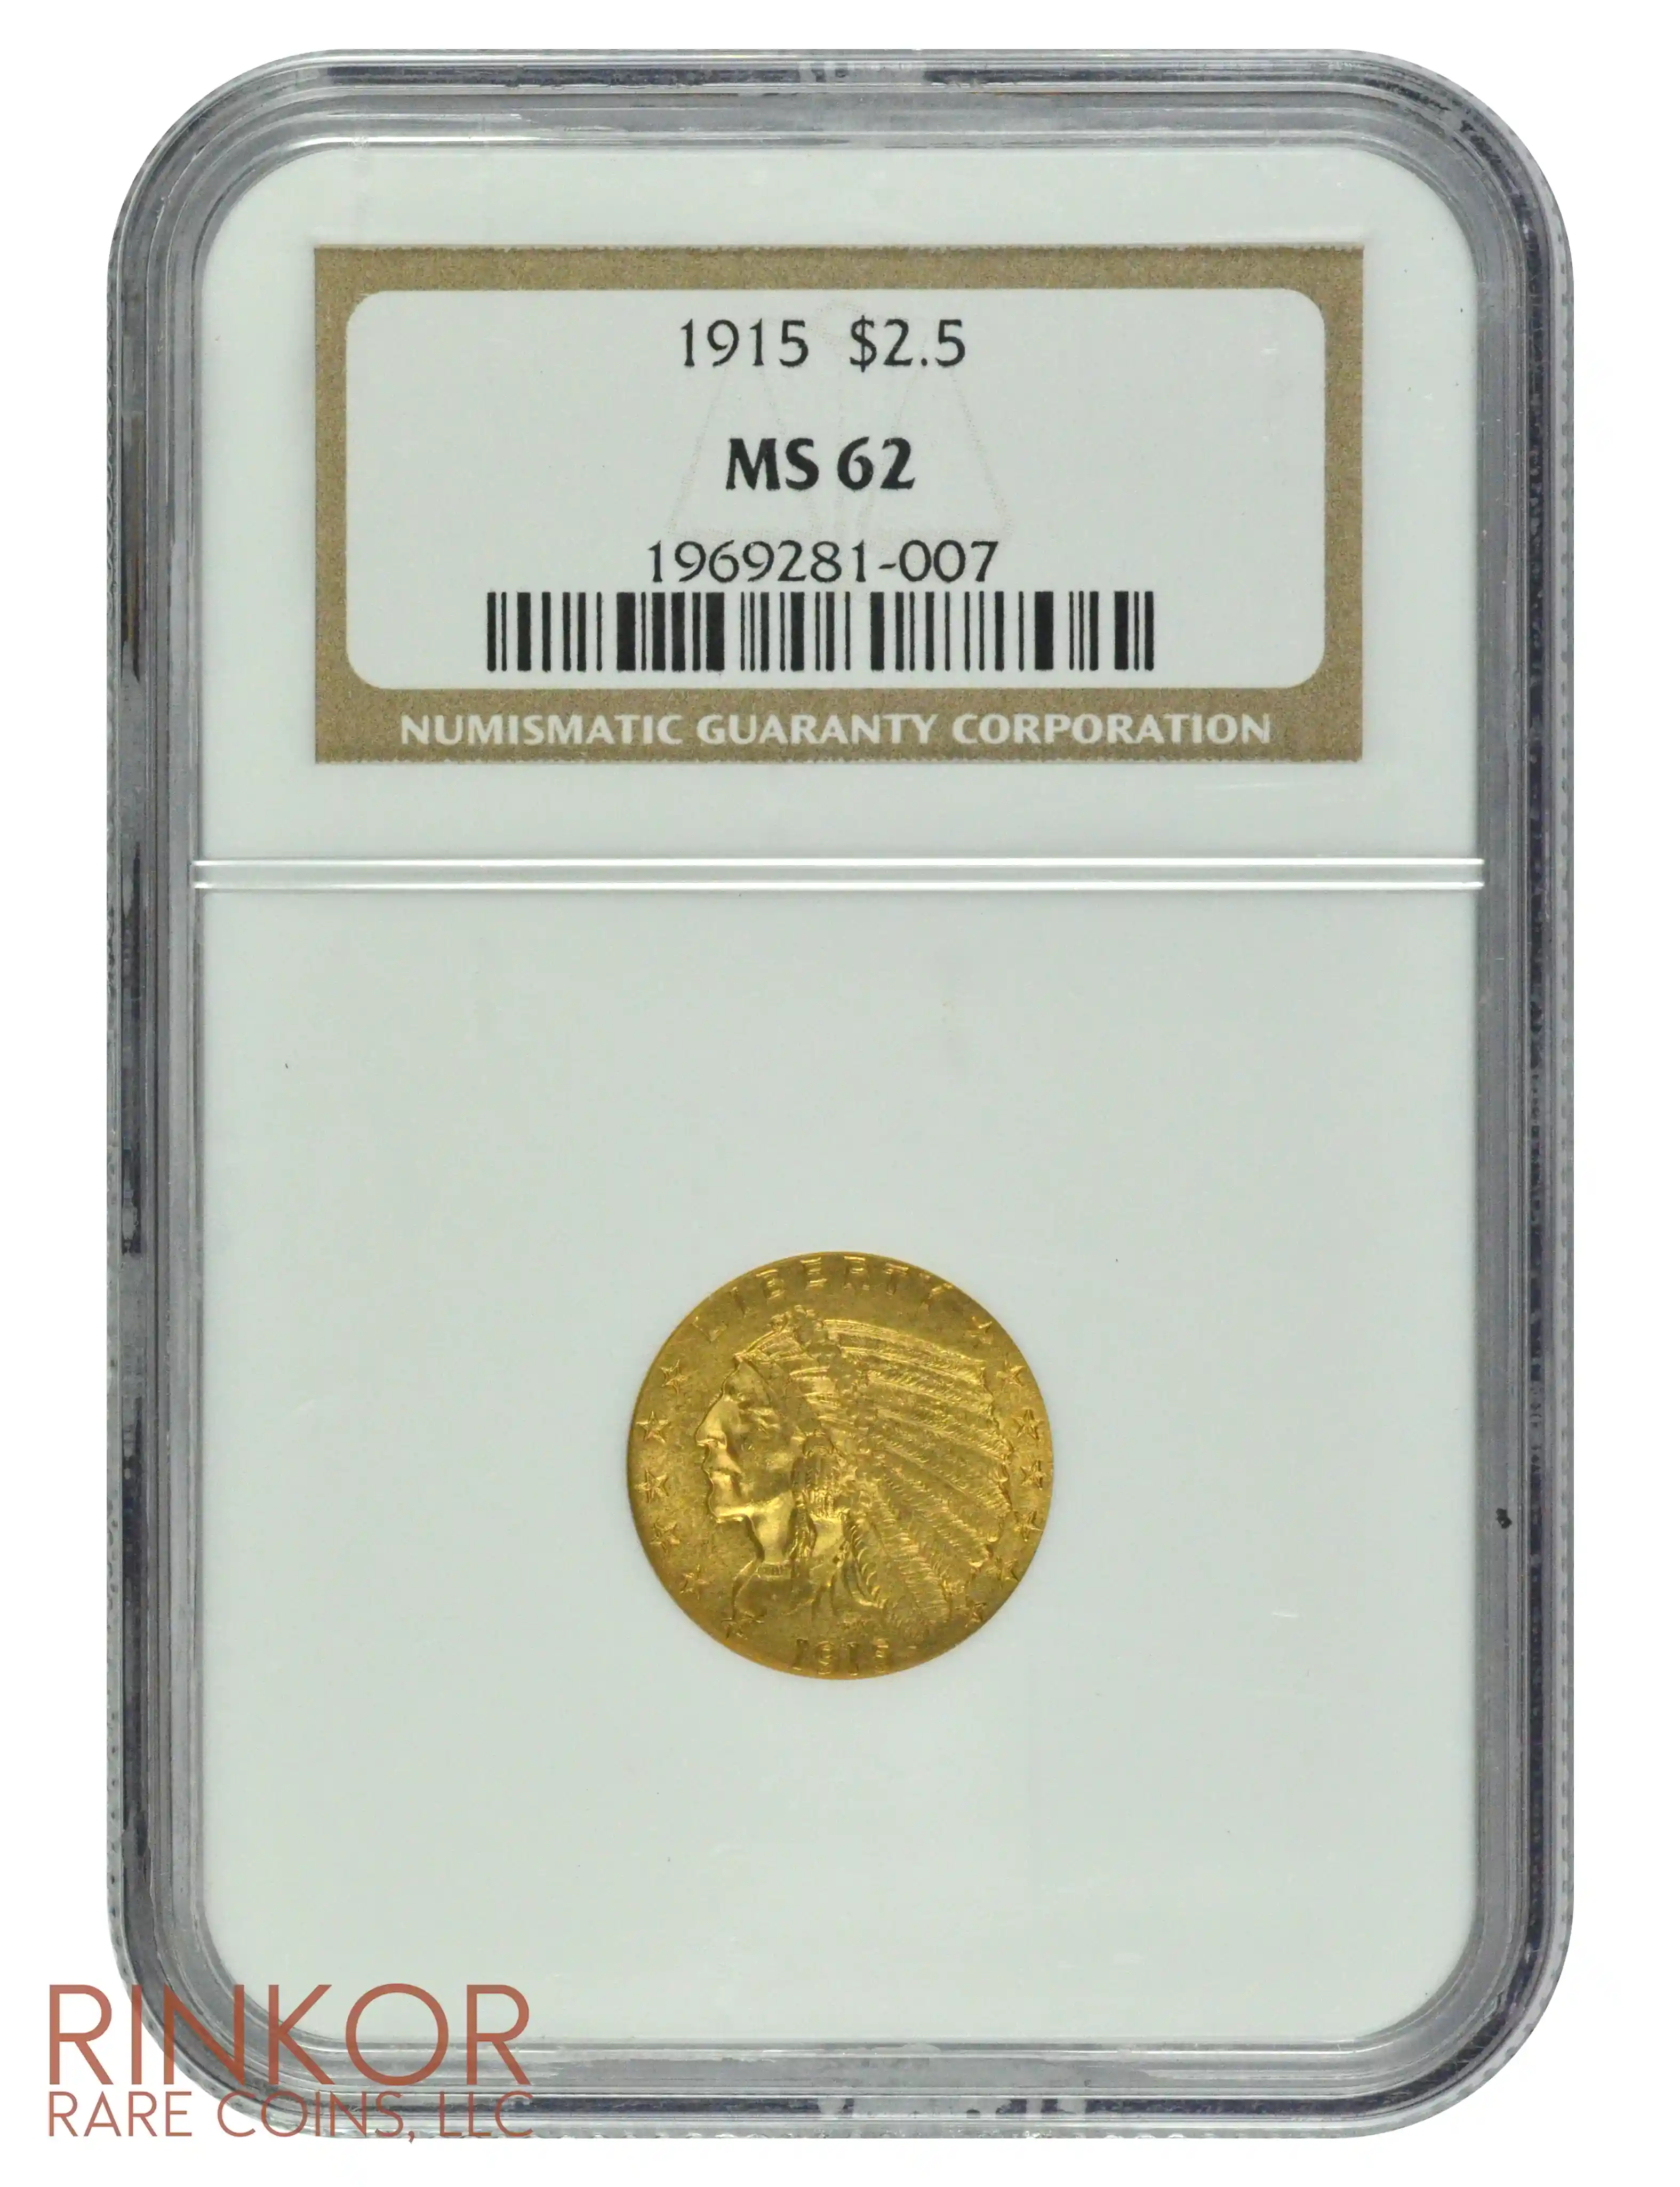 1915 $2.50 Indian Head NGC MS 62 